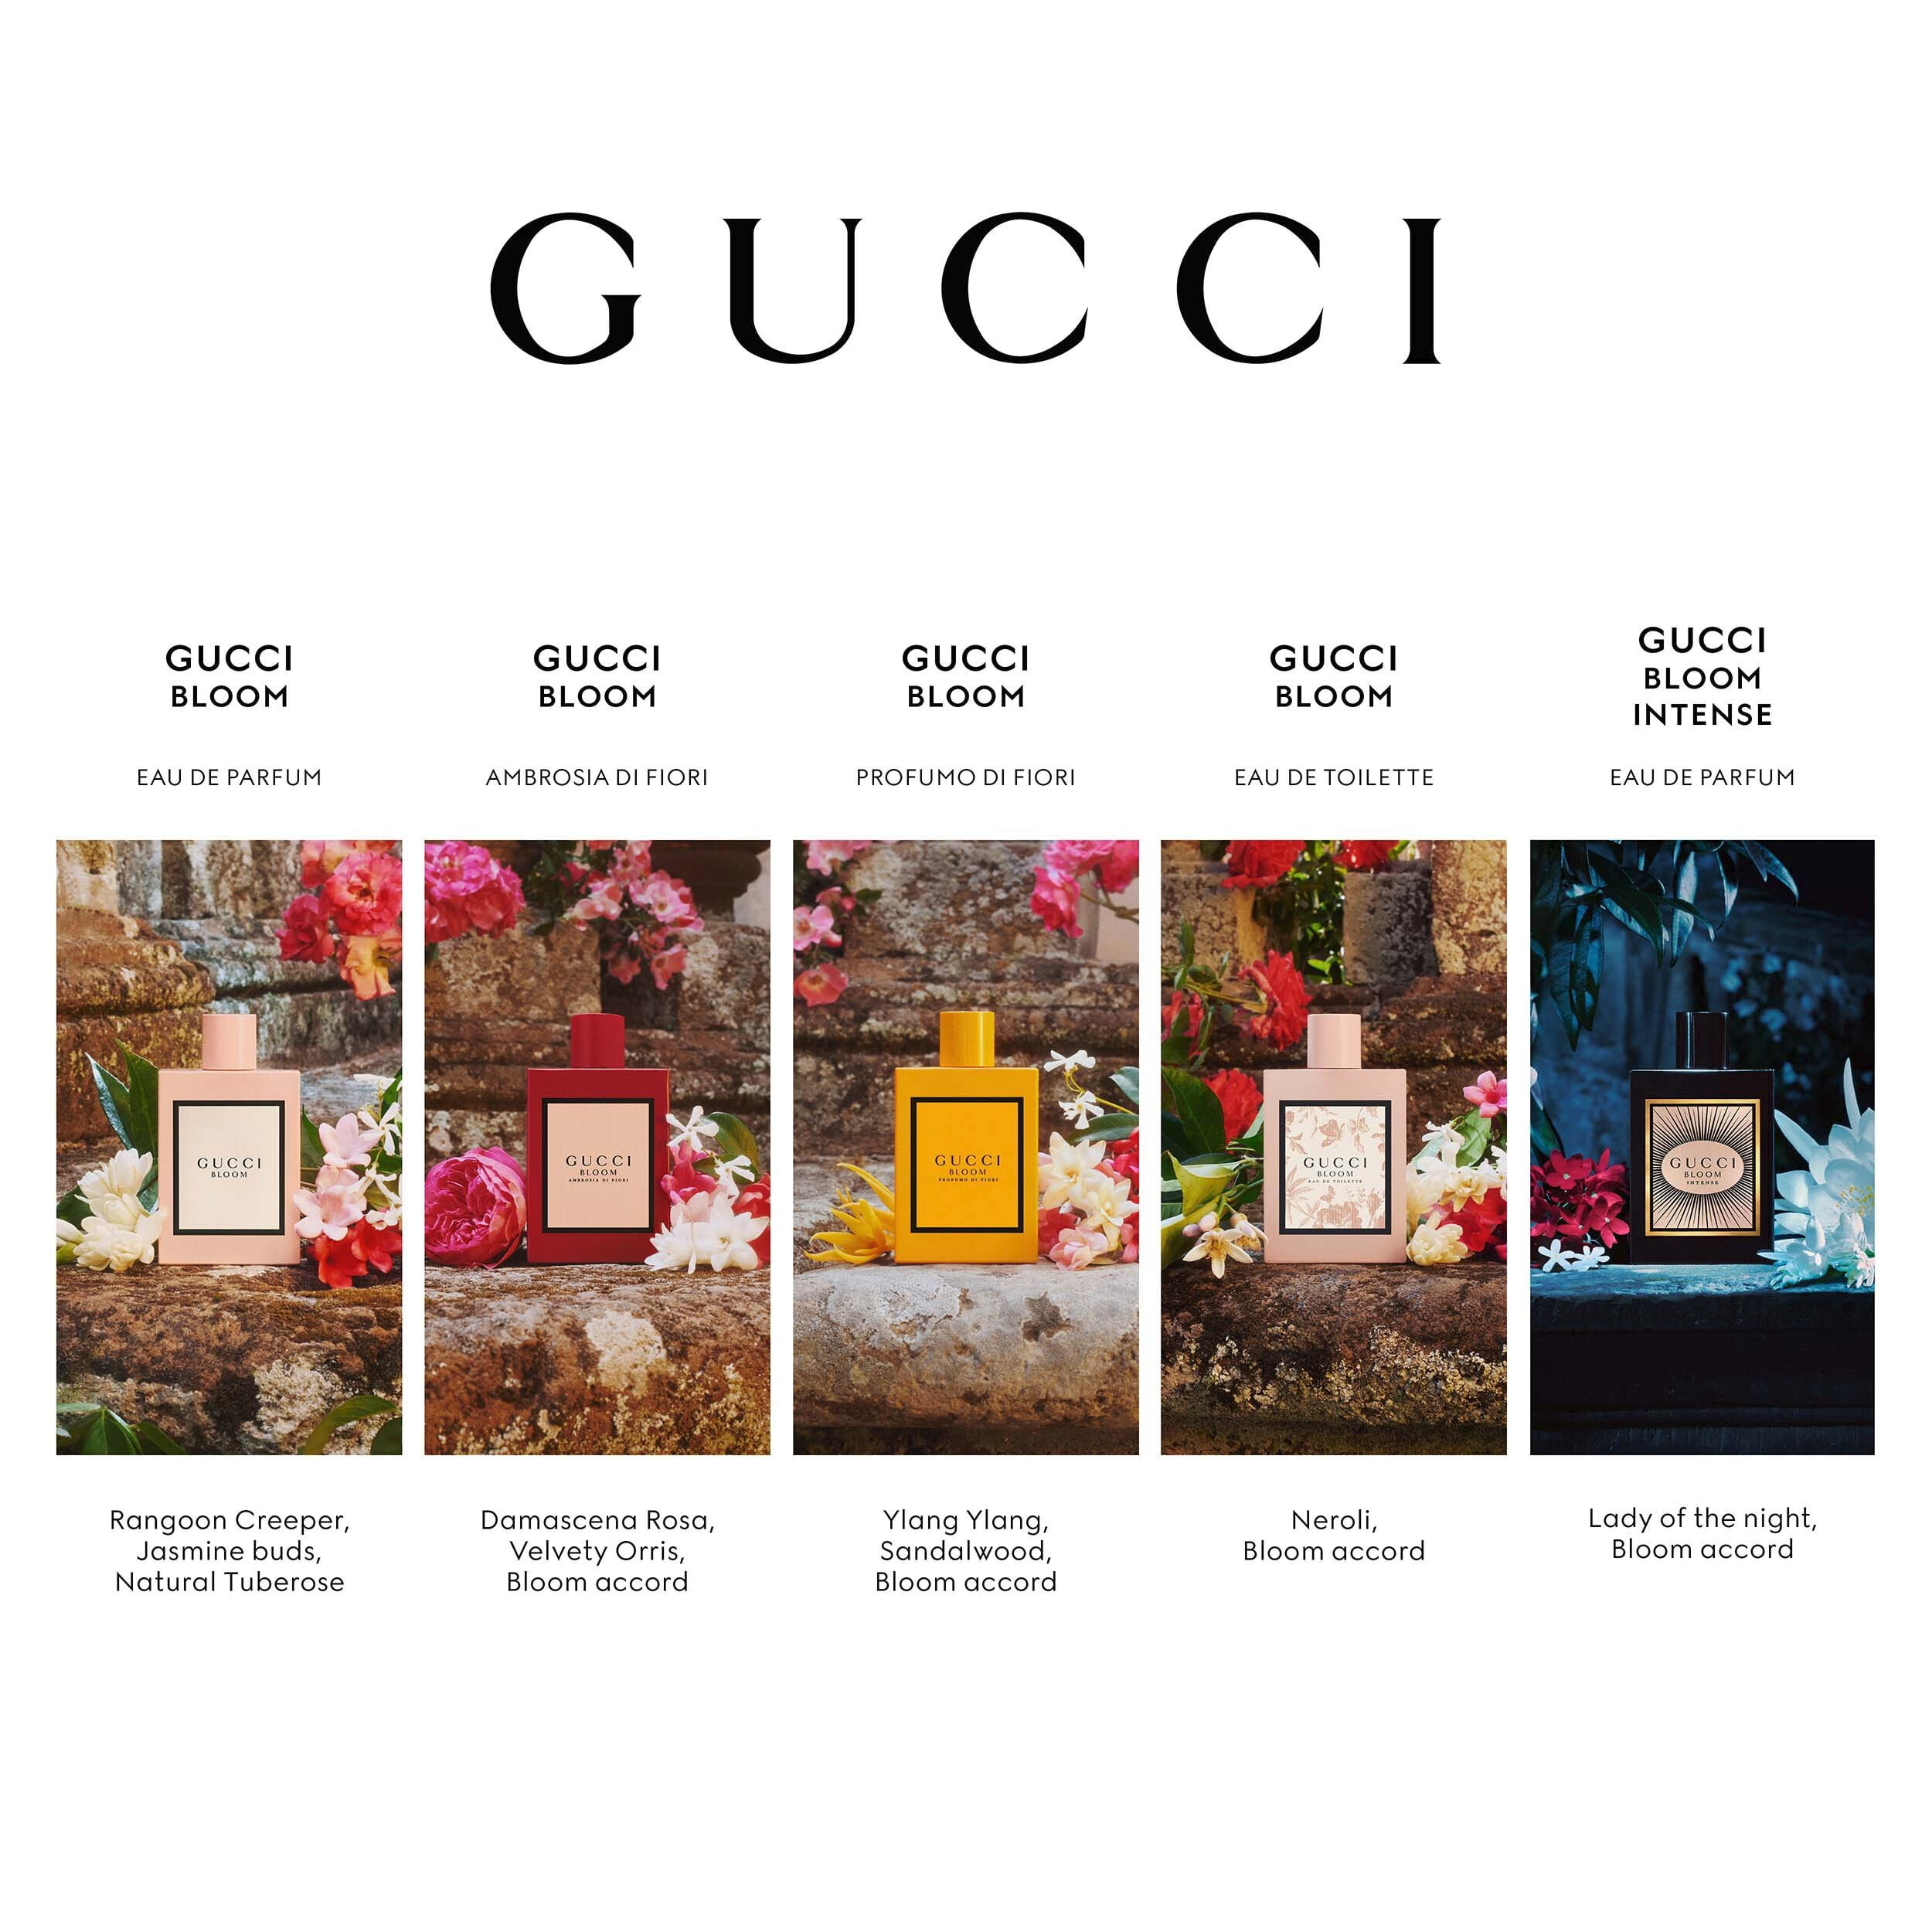 Gucci Bloom For Women 100ml Eau de Parfum Online Shopping on Gucci